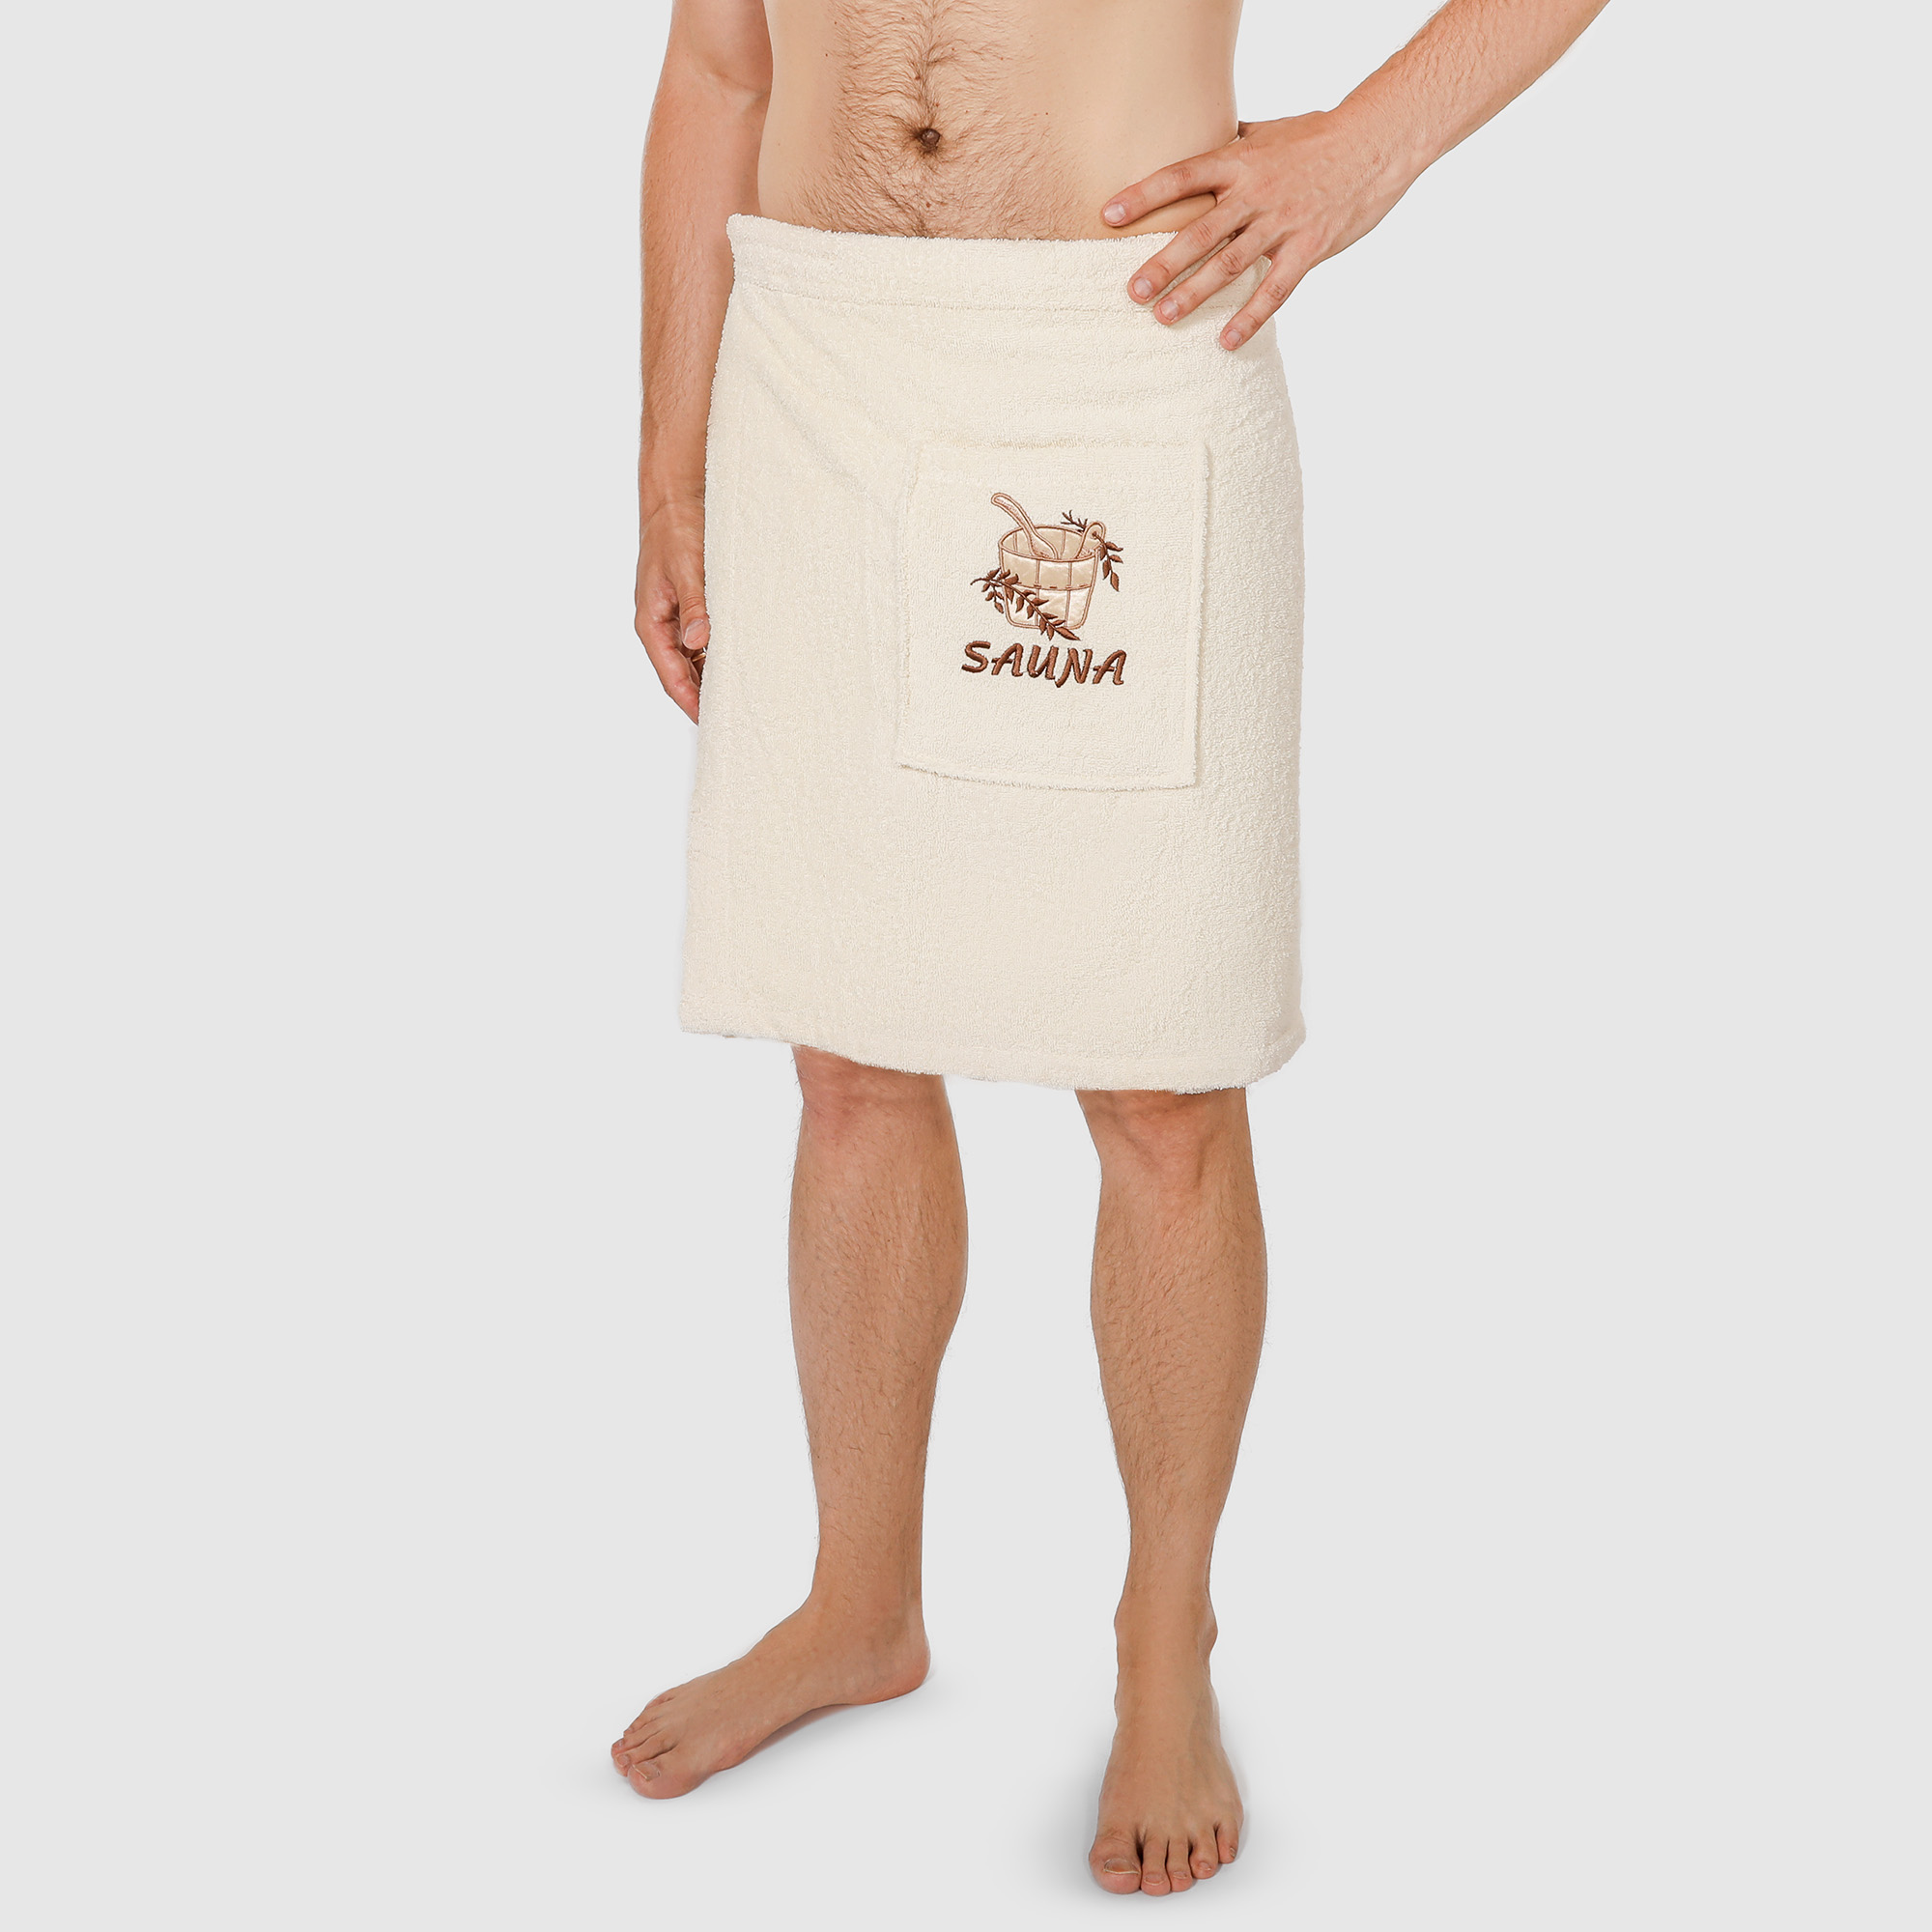 Килт мужской Asil sauna beige 55х160, цвет бежевый